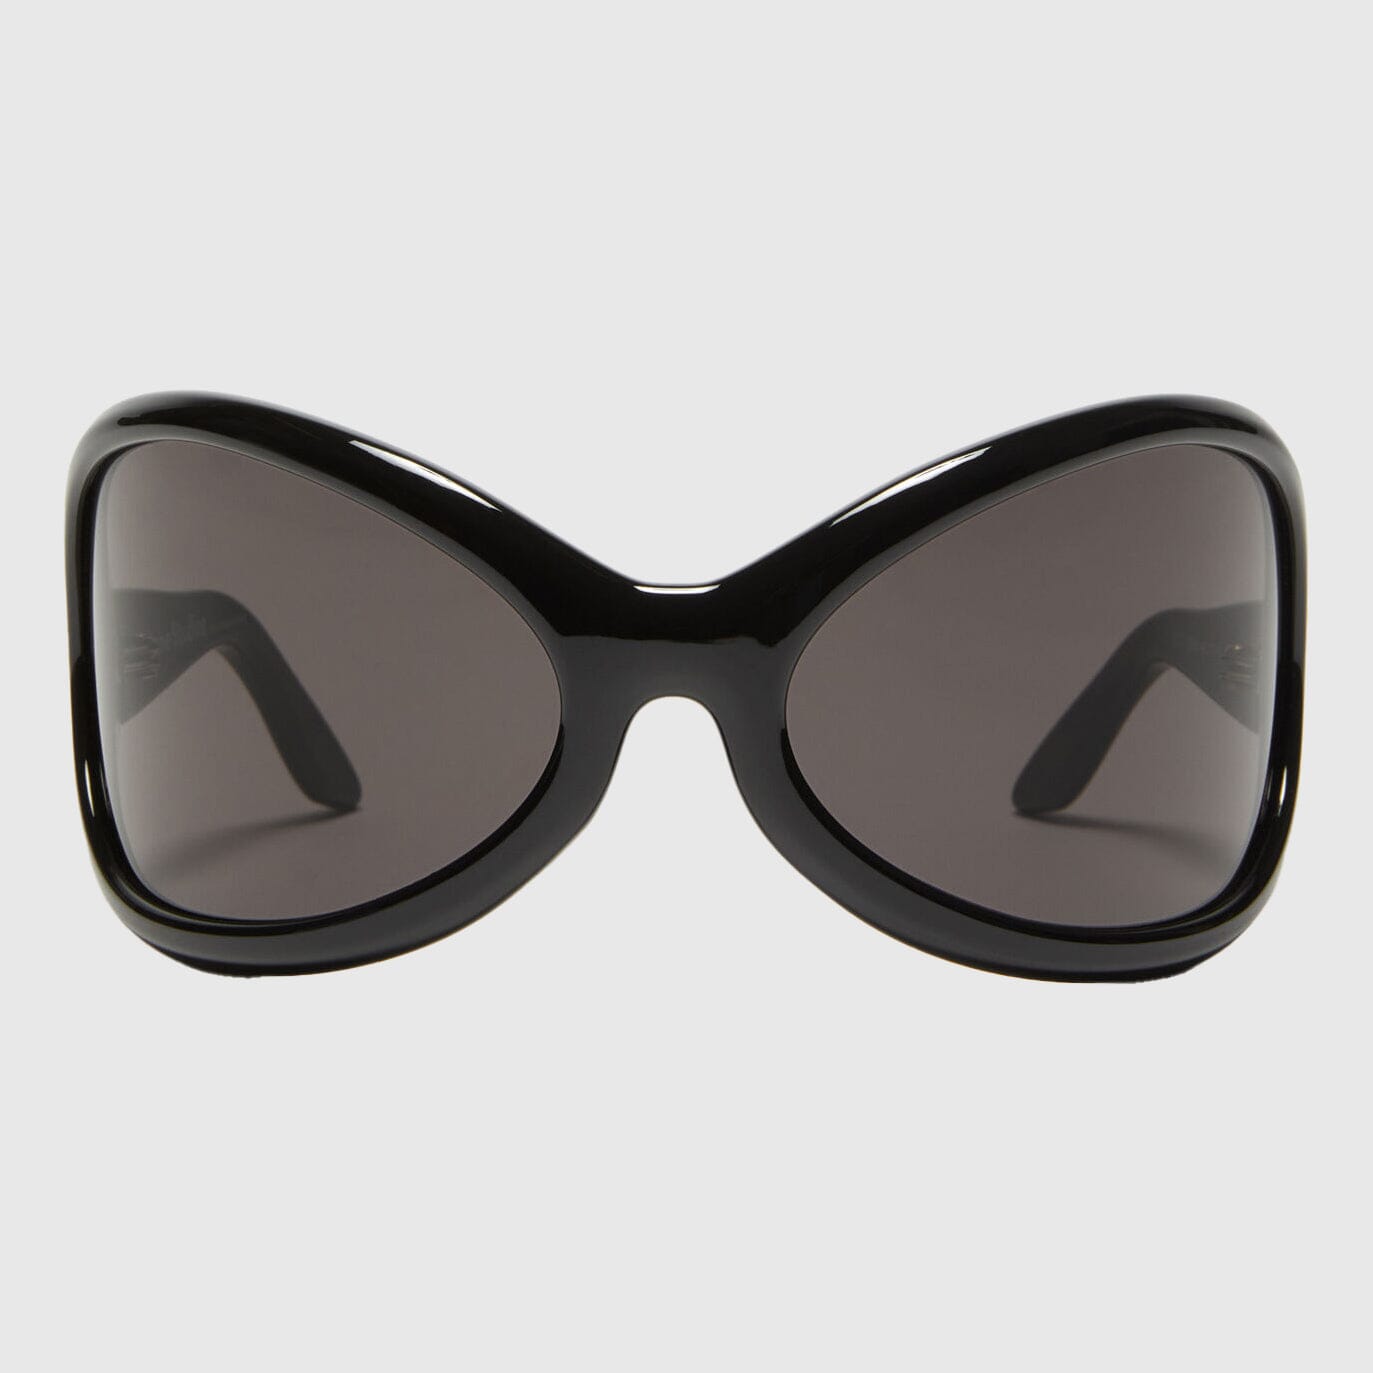 Acne Studios Sunglasses - Black/Black Sunglasses Acne Studios 